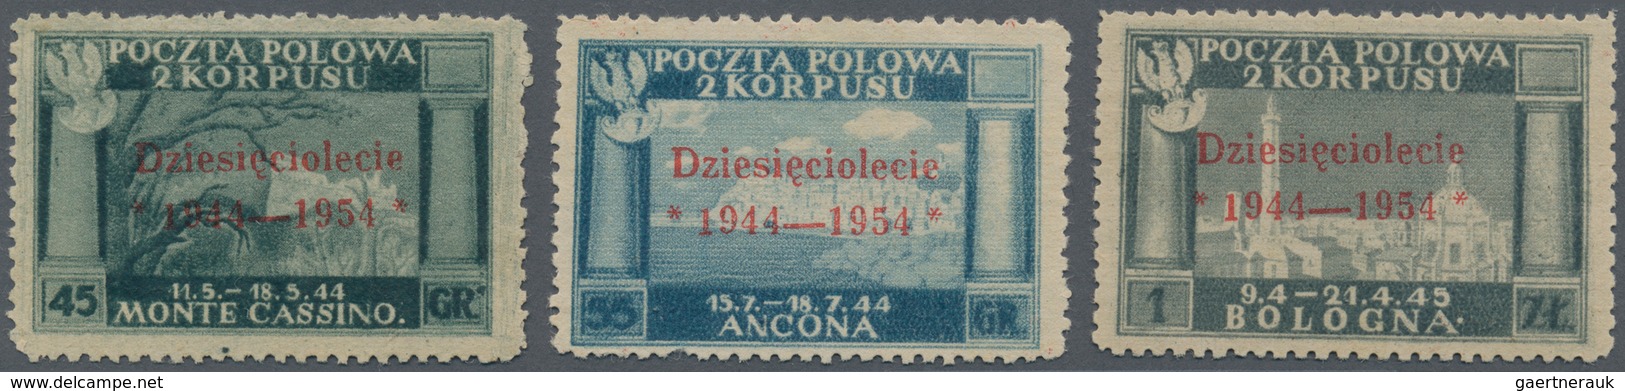 14787 Italien - Militärpostmarken: Feldpost: 1945, "POCZTA POLOWA 2. KORPUSU" 45 Gr., 55 Gr. And 1 Zt. Ove - Poste Militaire (PM)